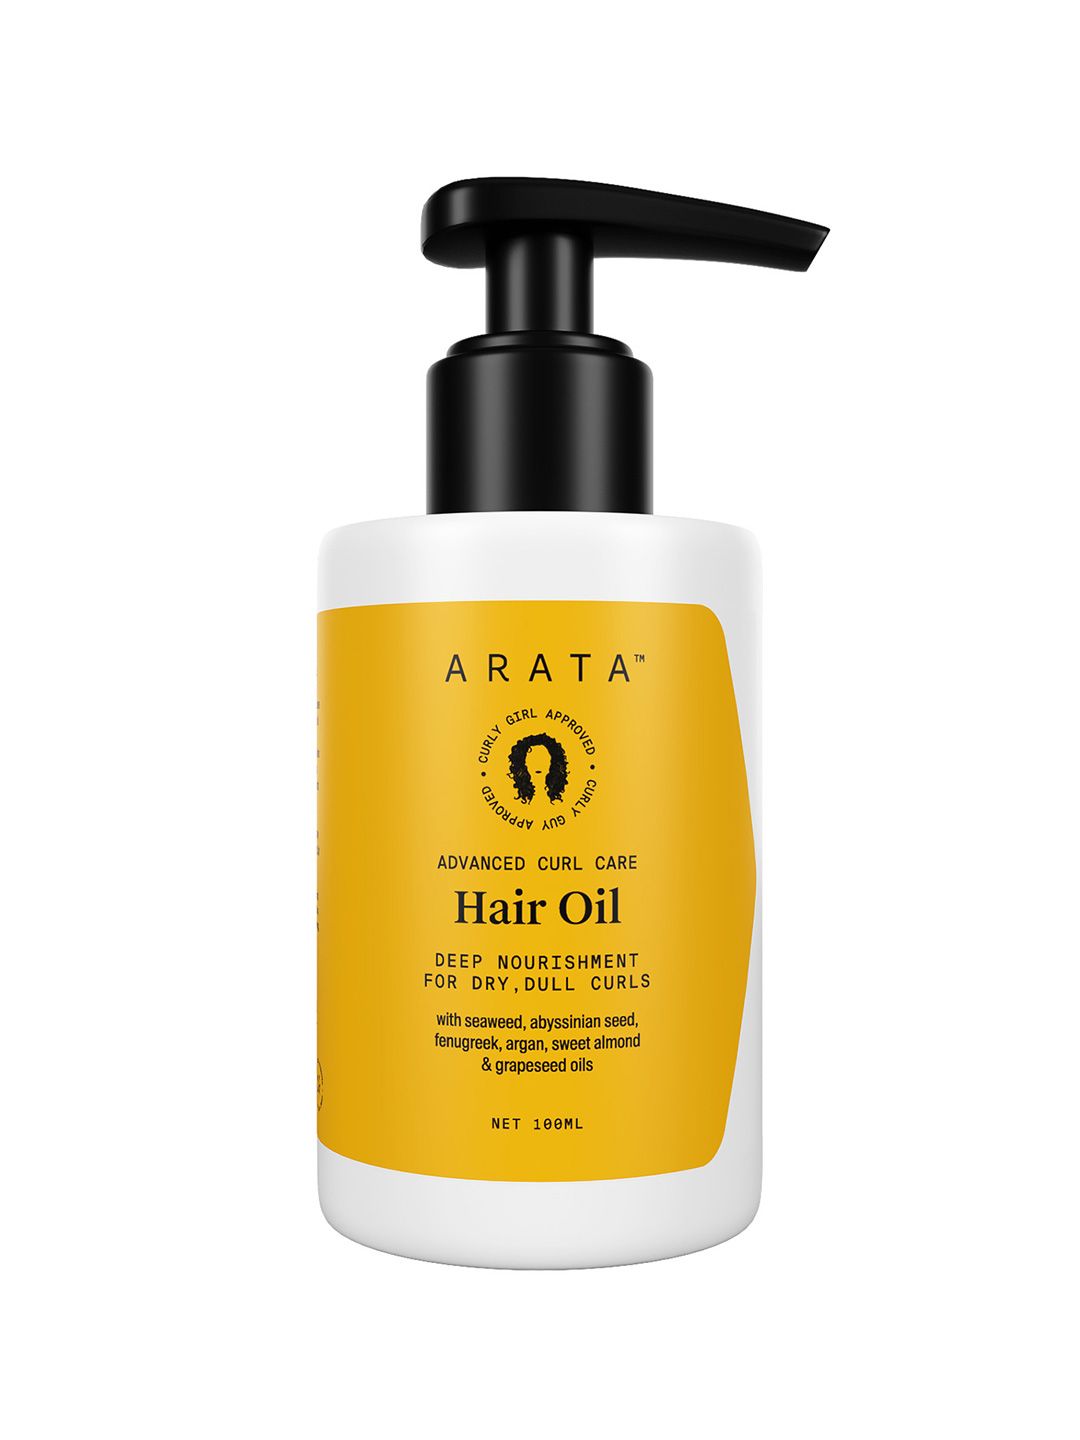 ARATA Advanced Curl Care Hair Oil - Deep Nourishment for Dry Dull Curls - 100 ml Price in India